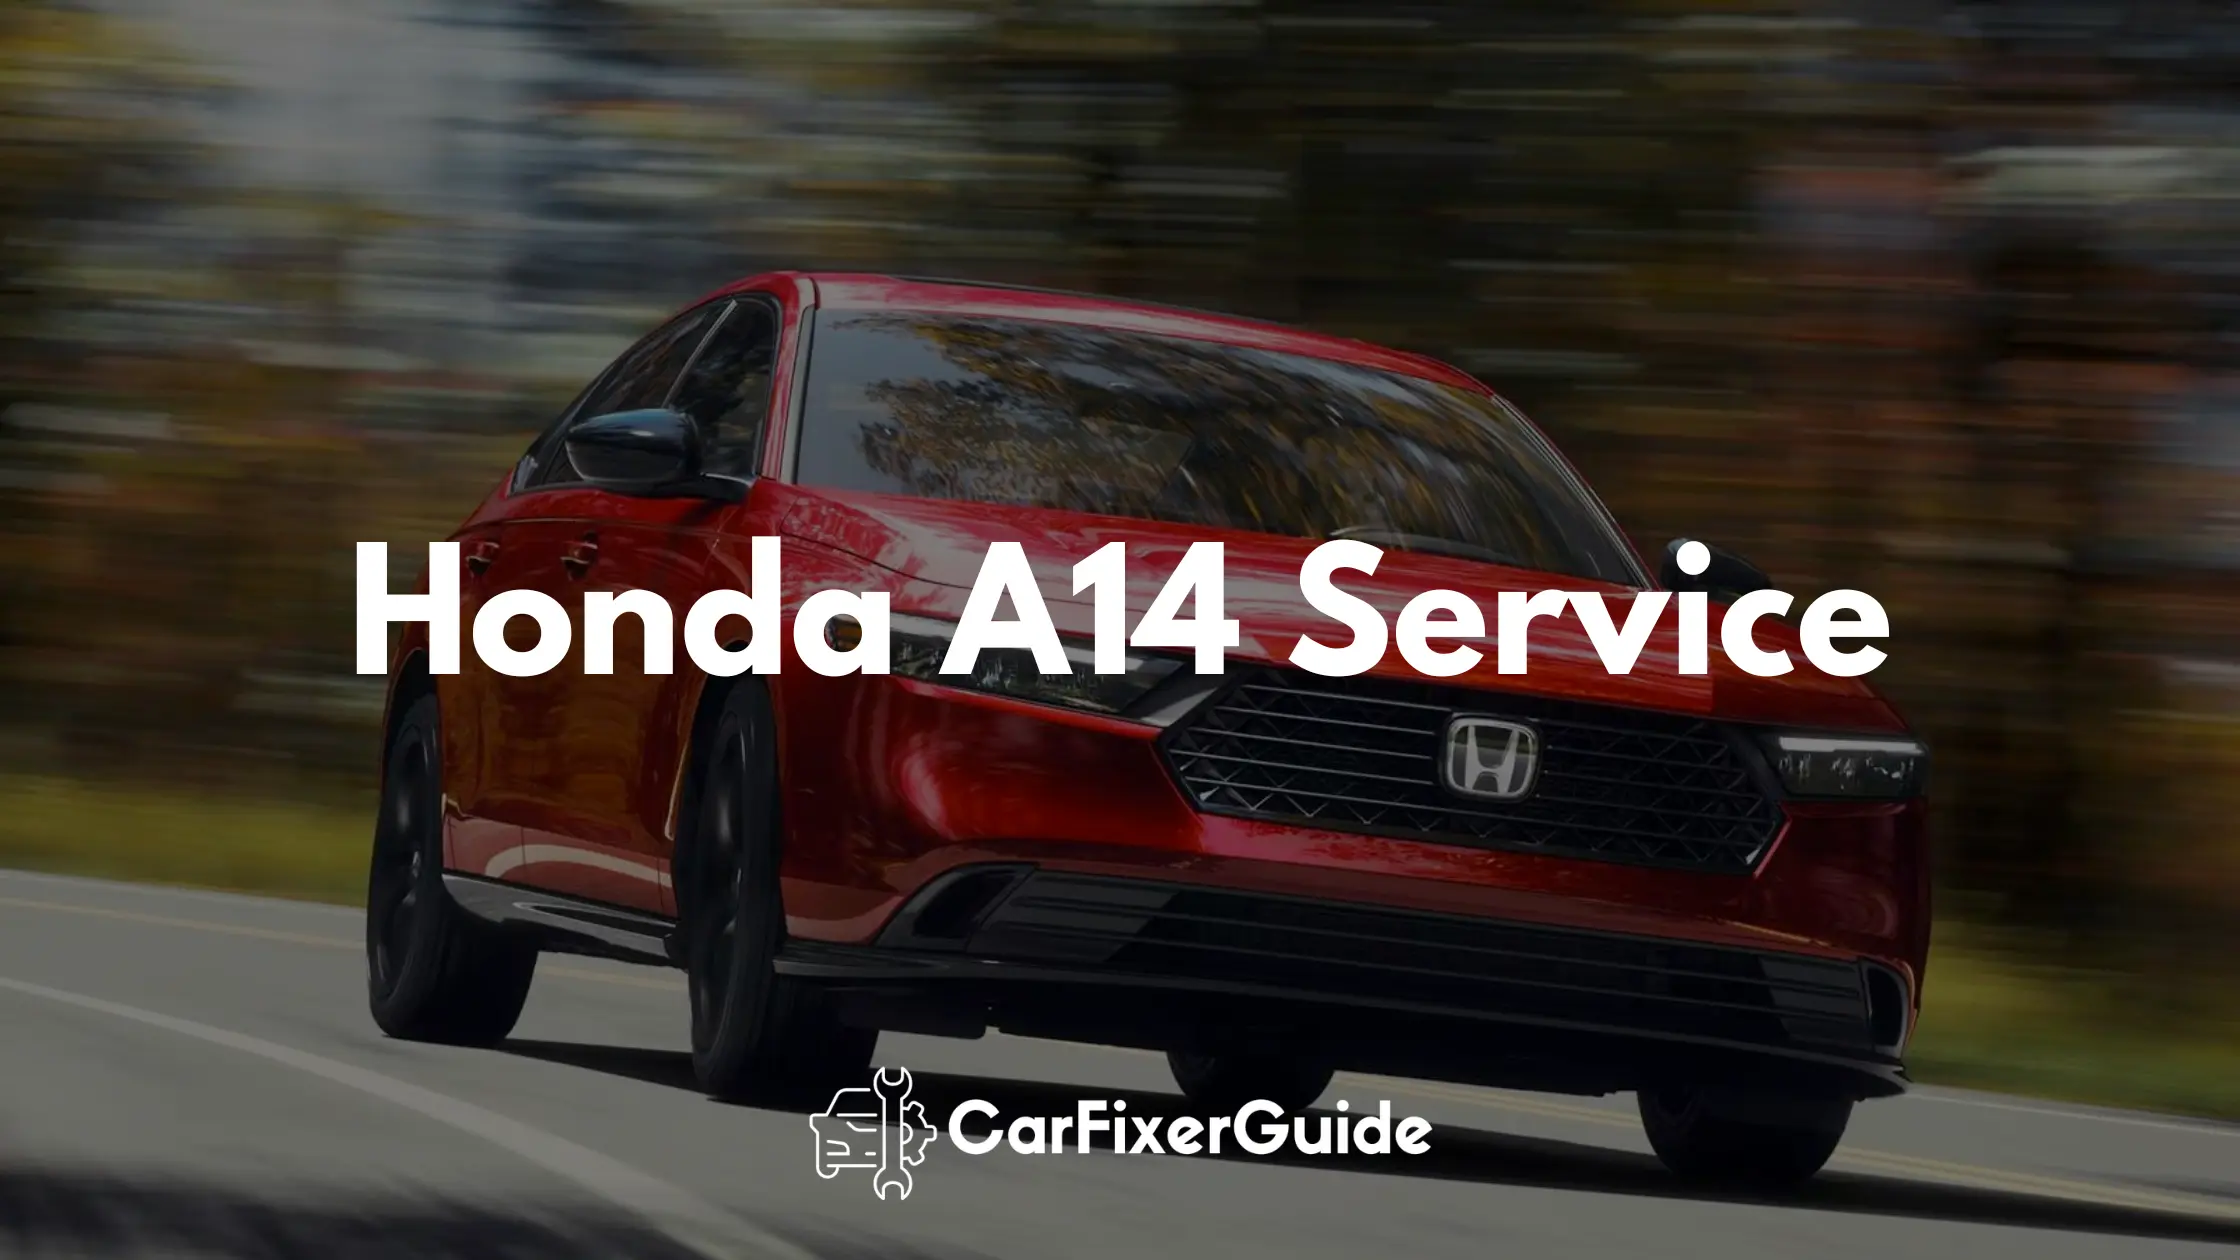 Honda A14 Service